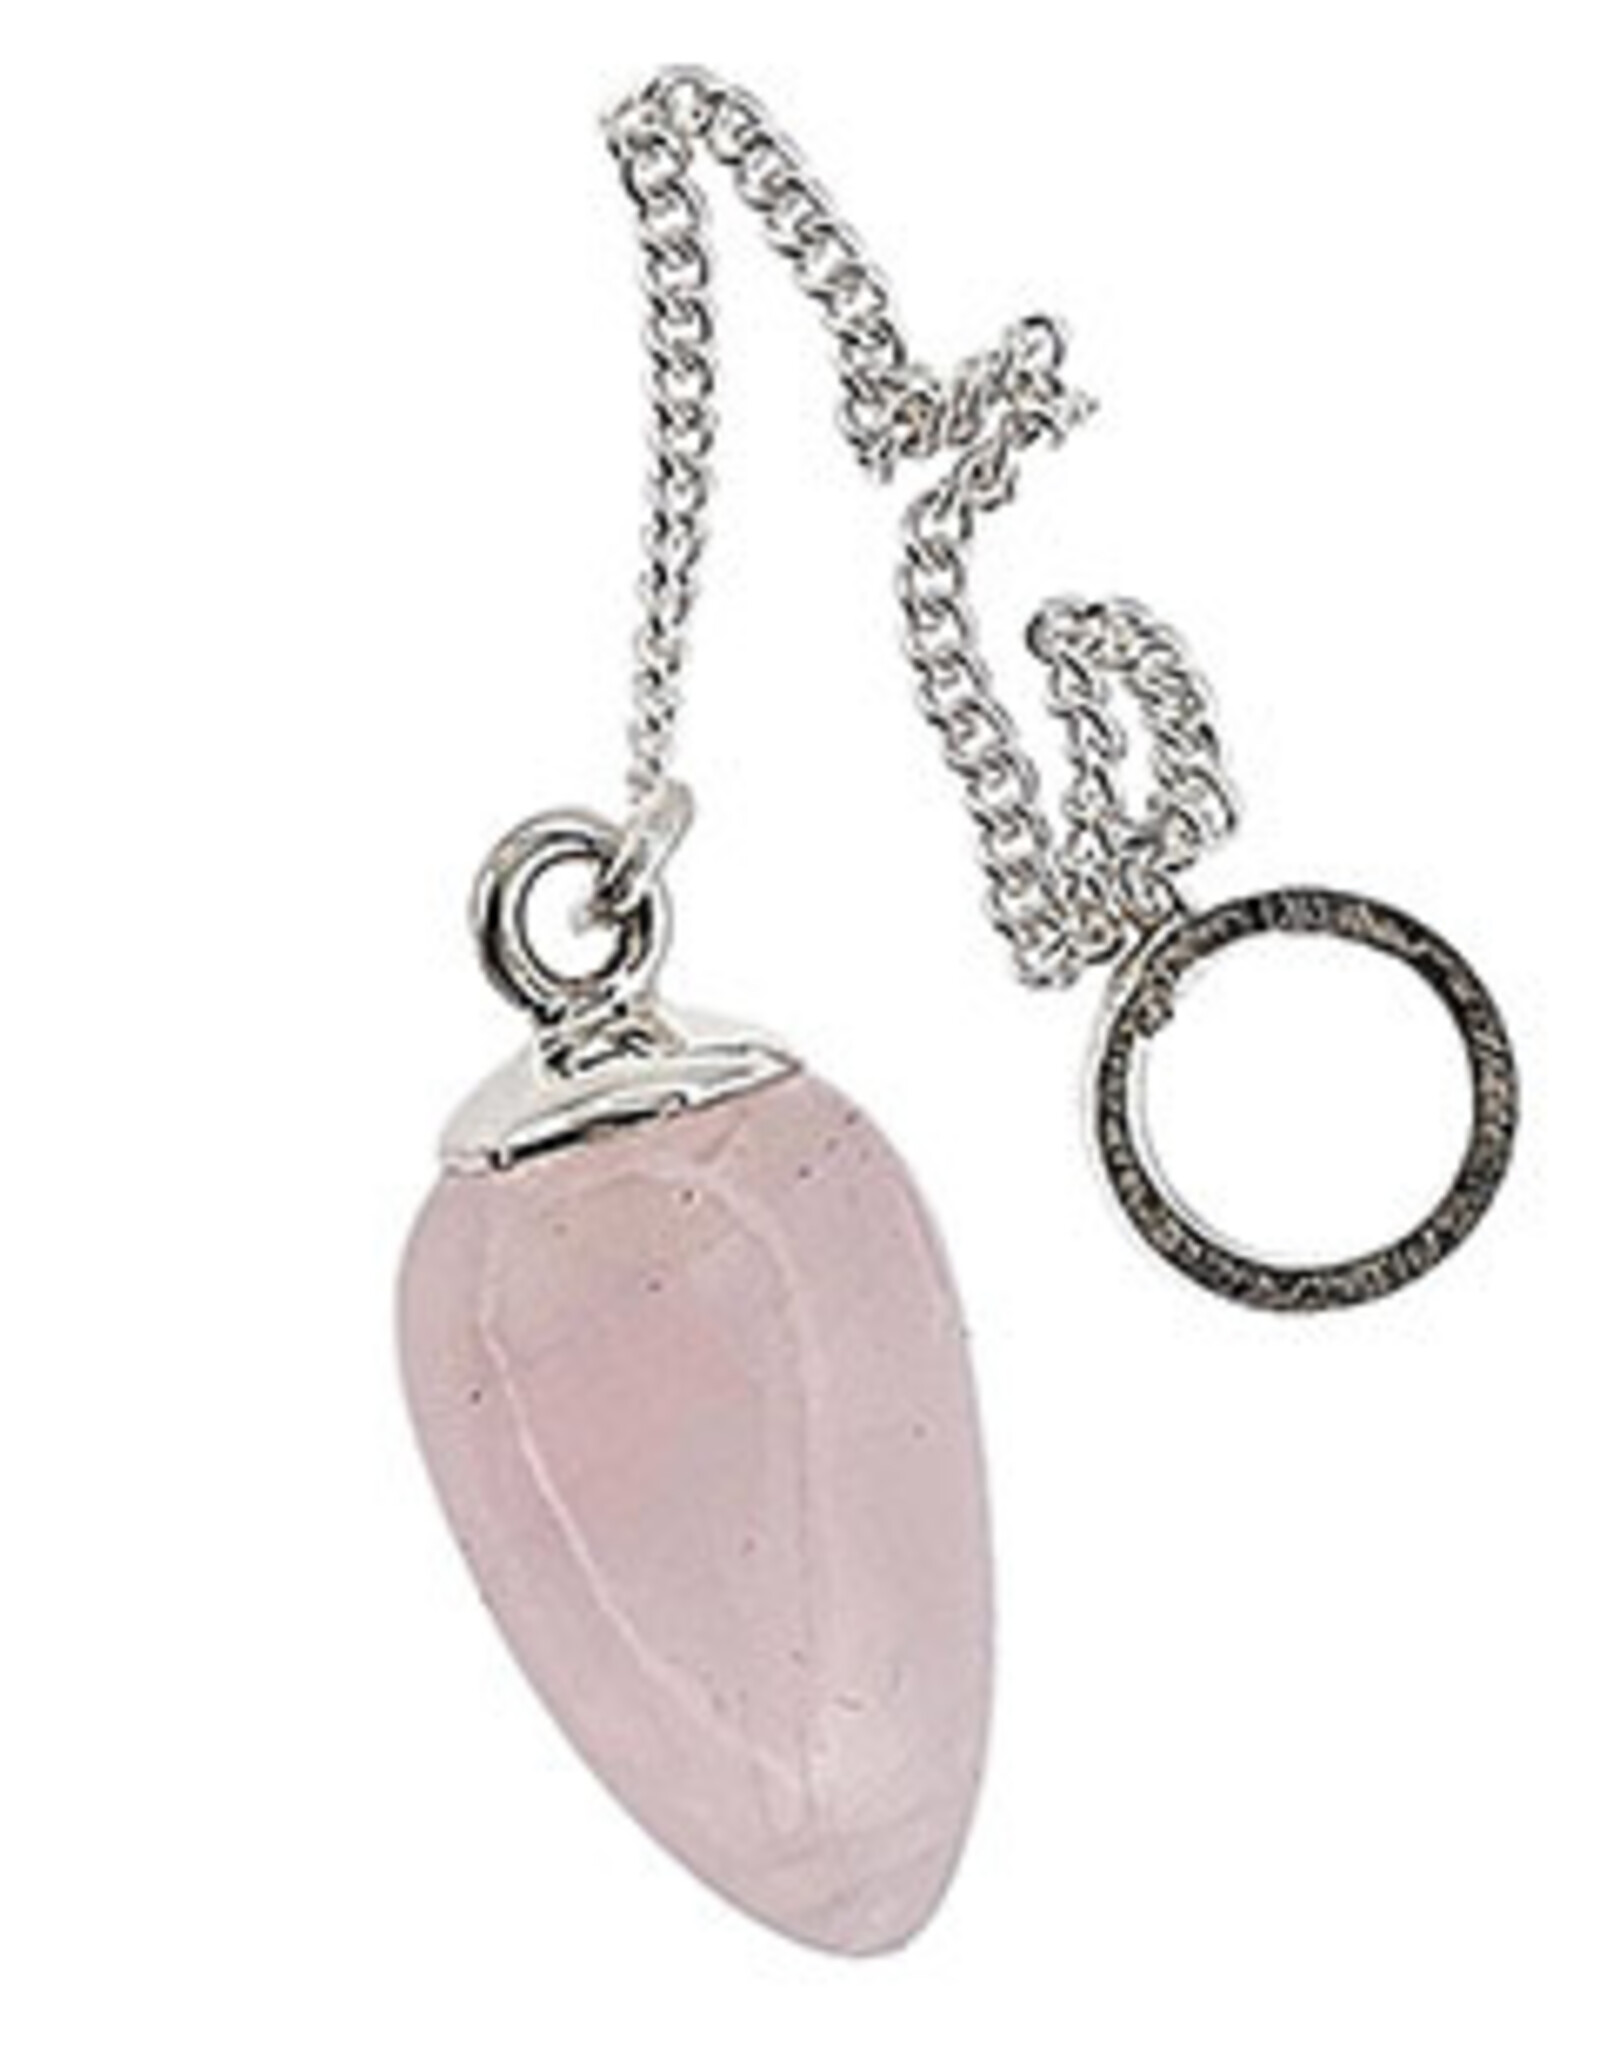 Rose Quartz Necklace Pendulum Sterling Silver